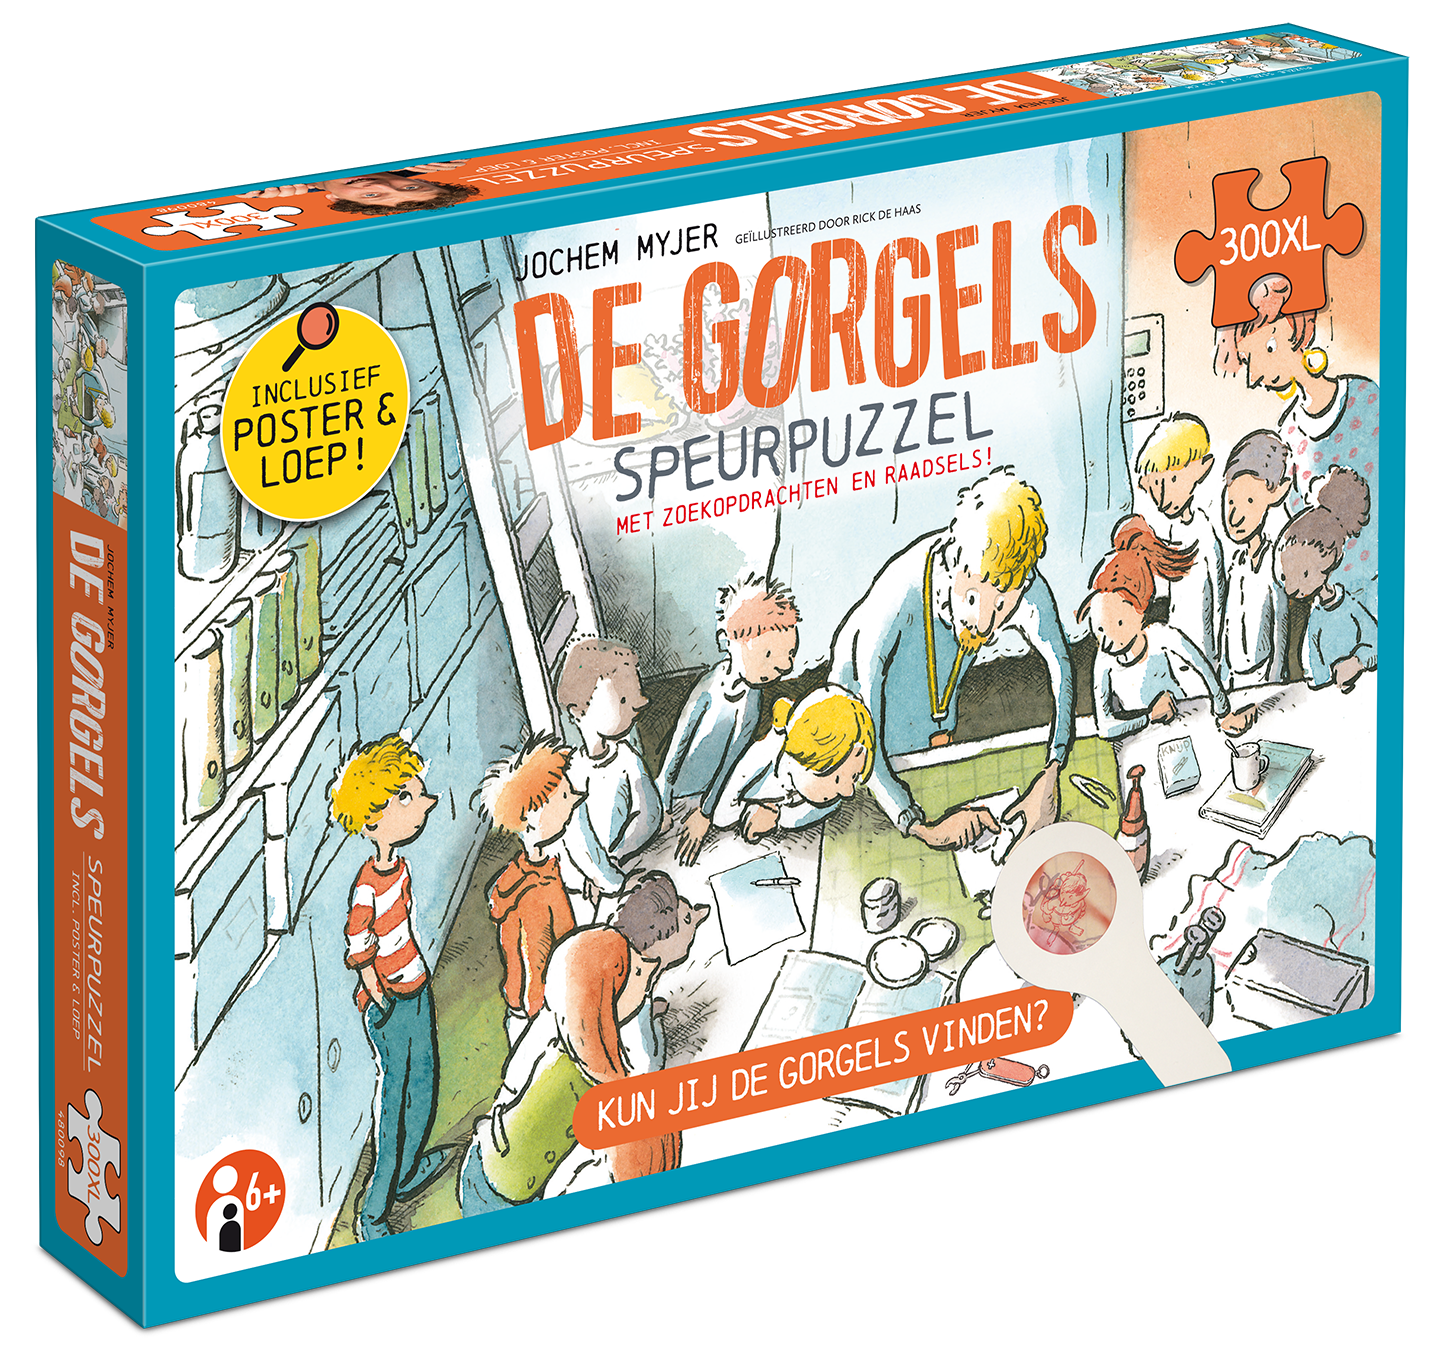 Gorgels - Speurpuzzel (300 XL) |